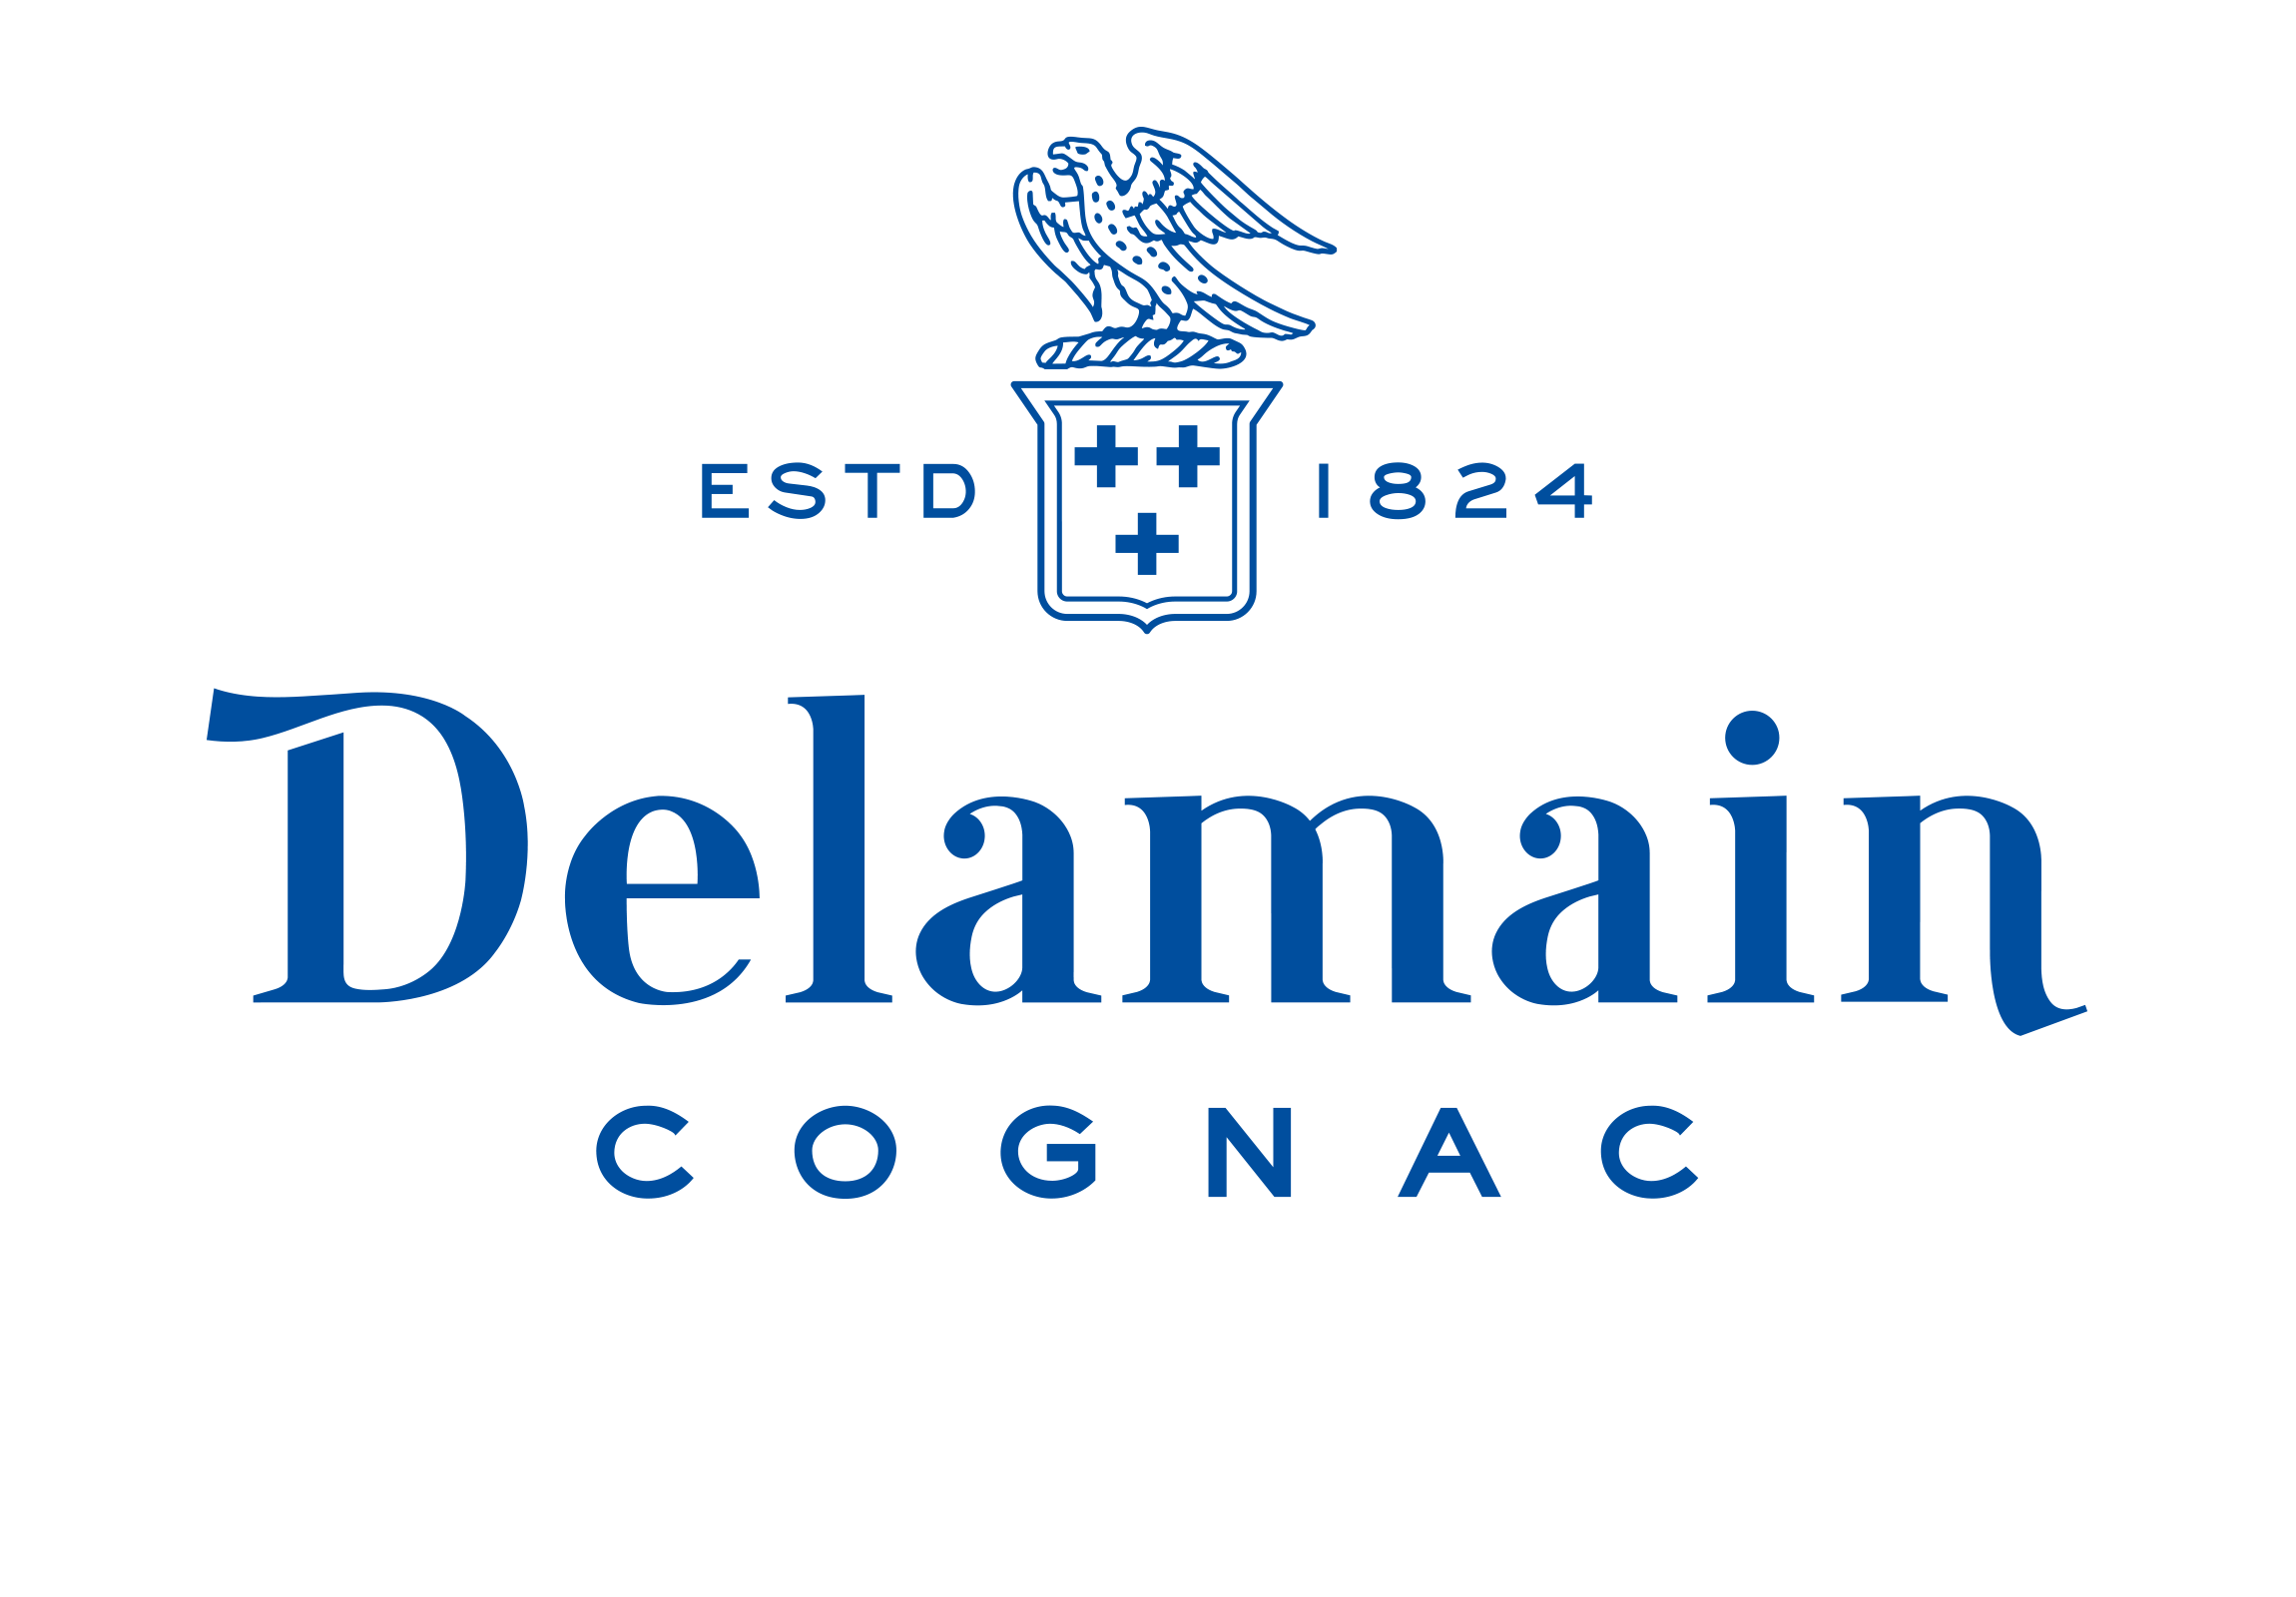 Delamain